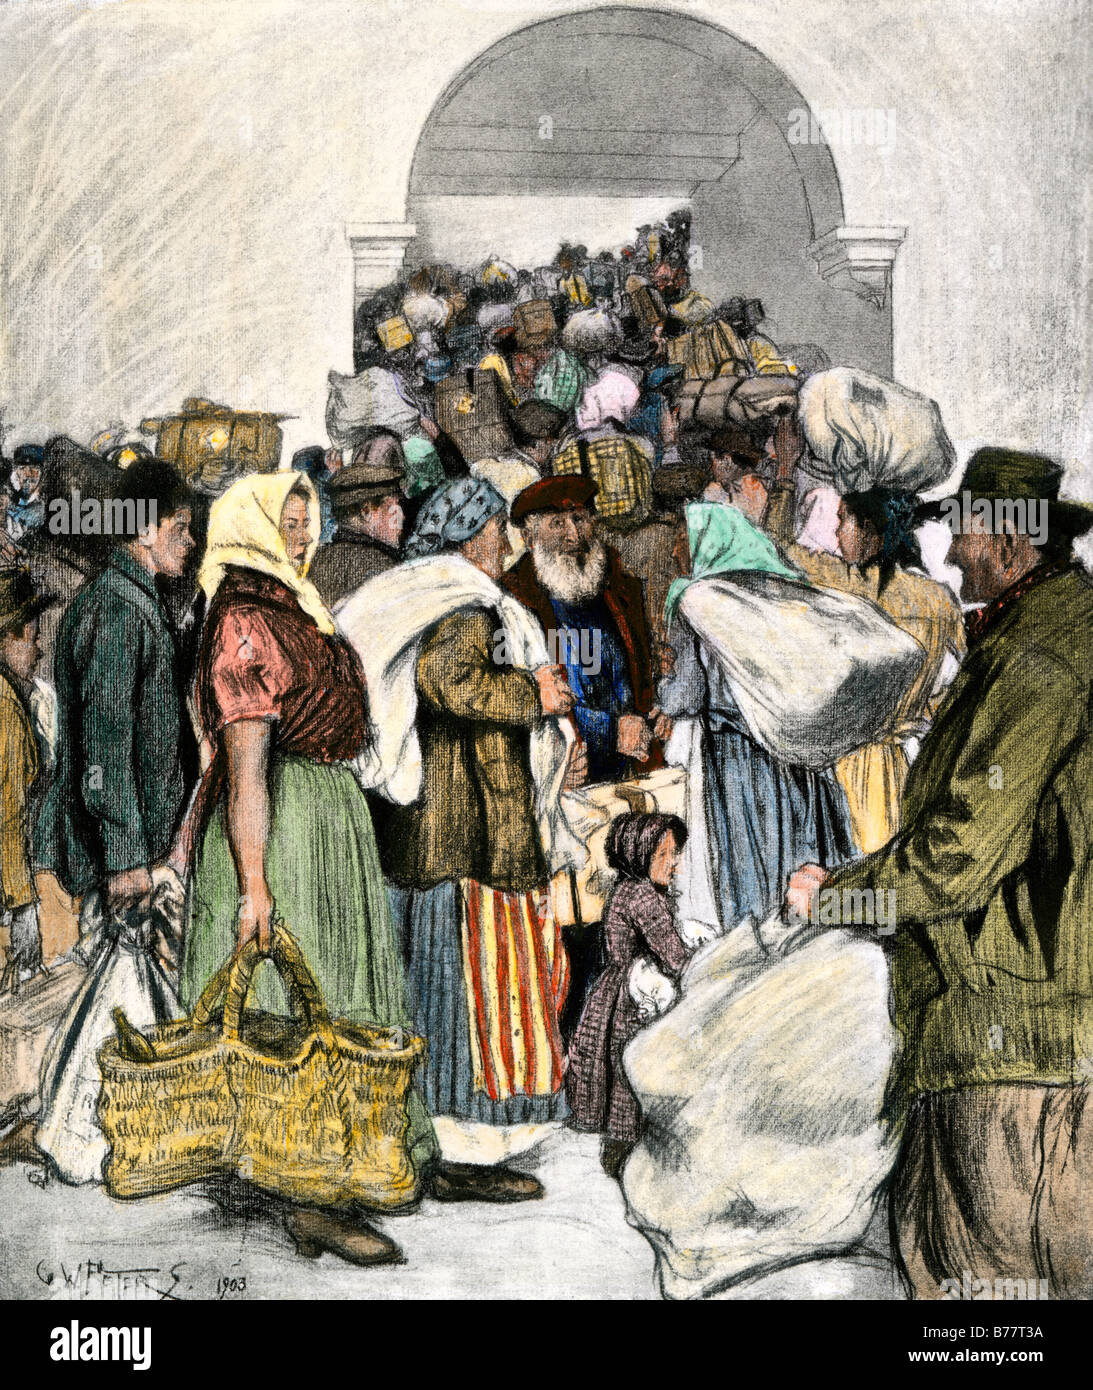 European Immigrants Arriving At Ellis Island In New York City 1903